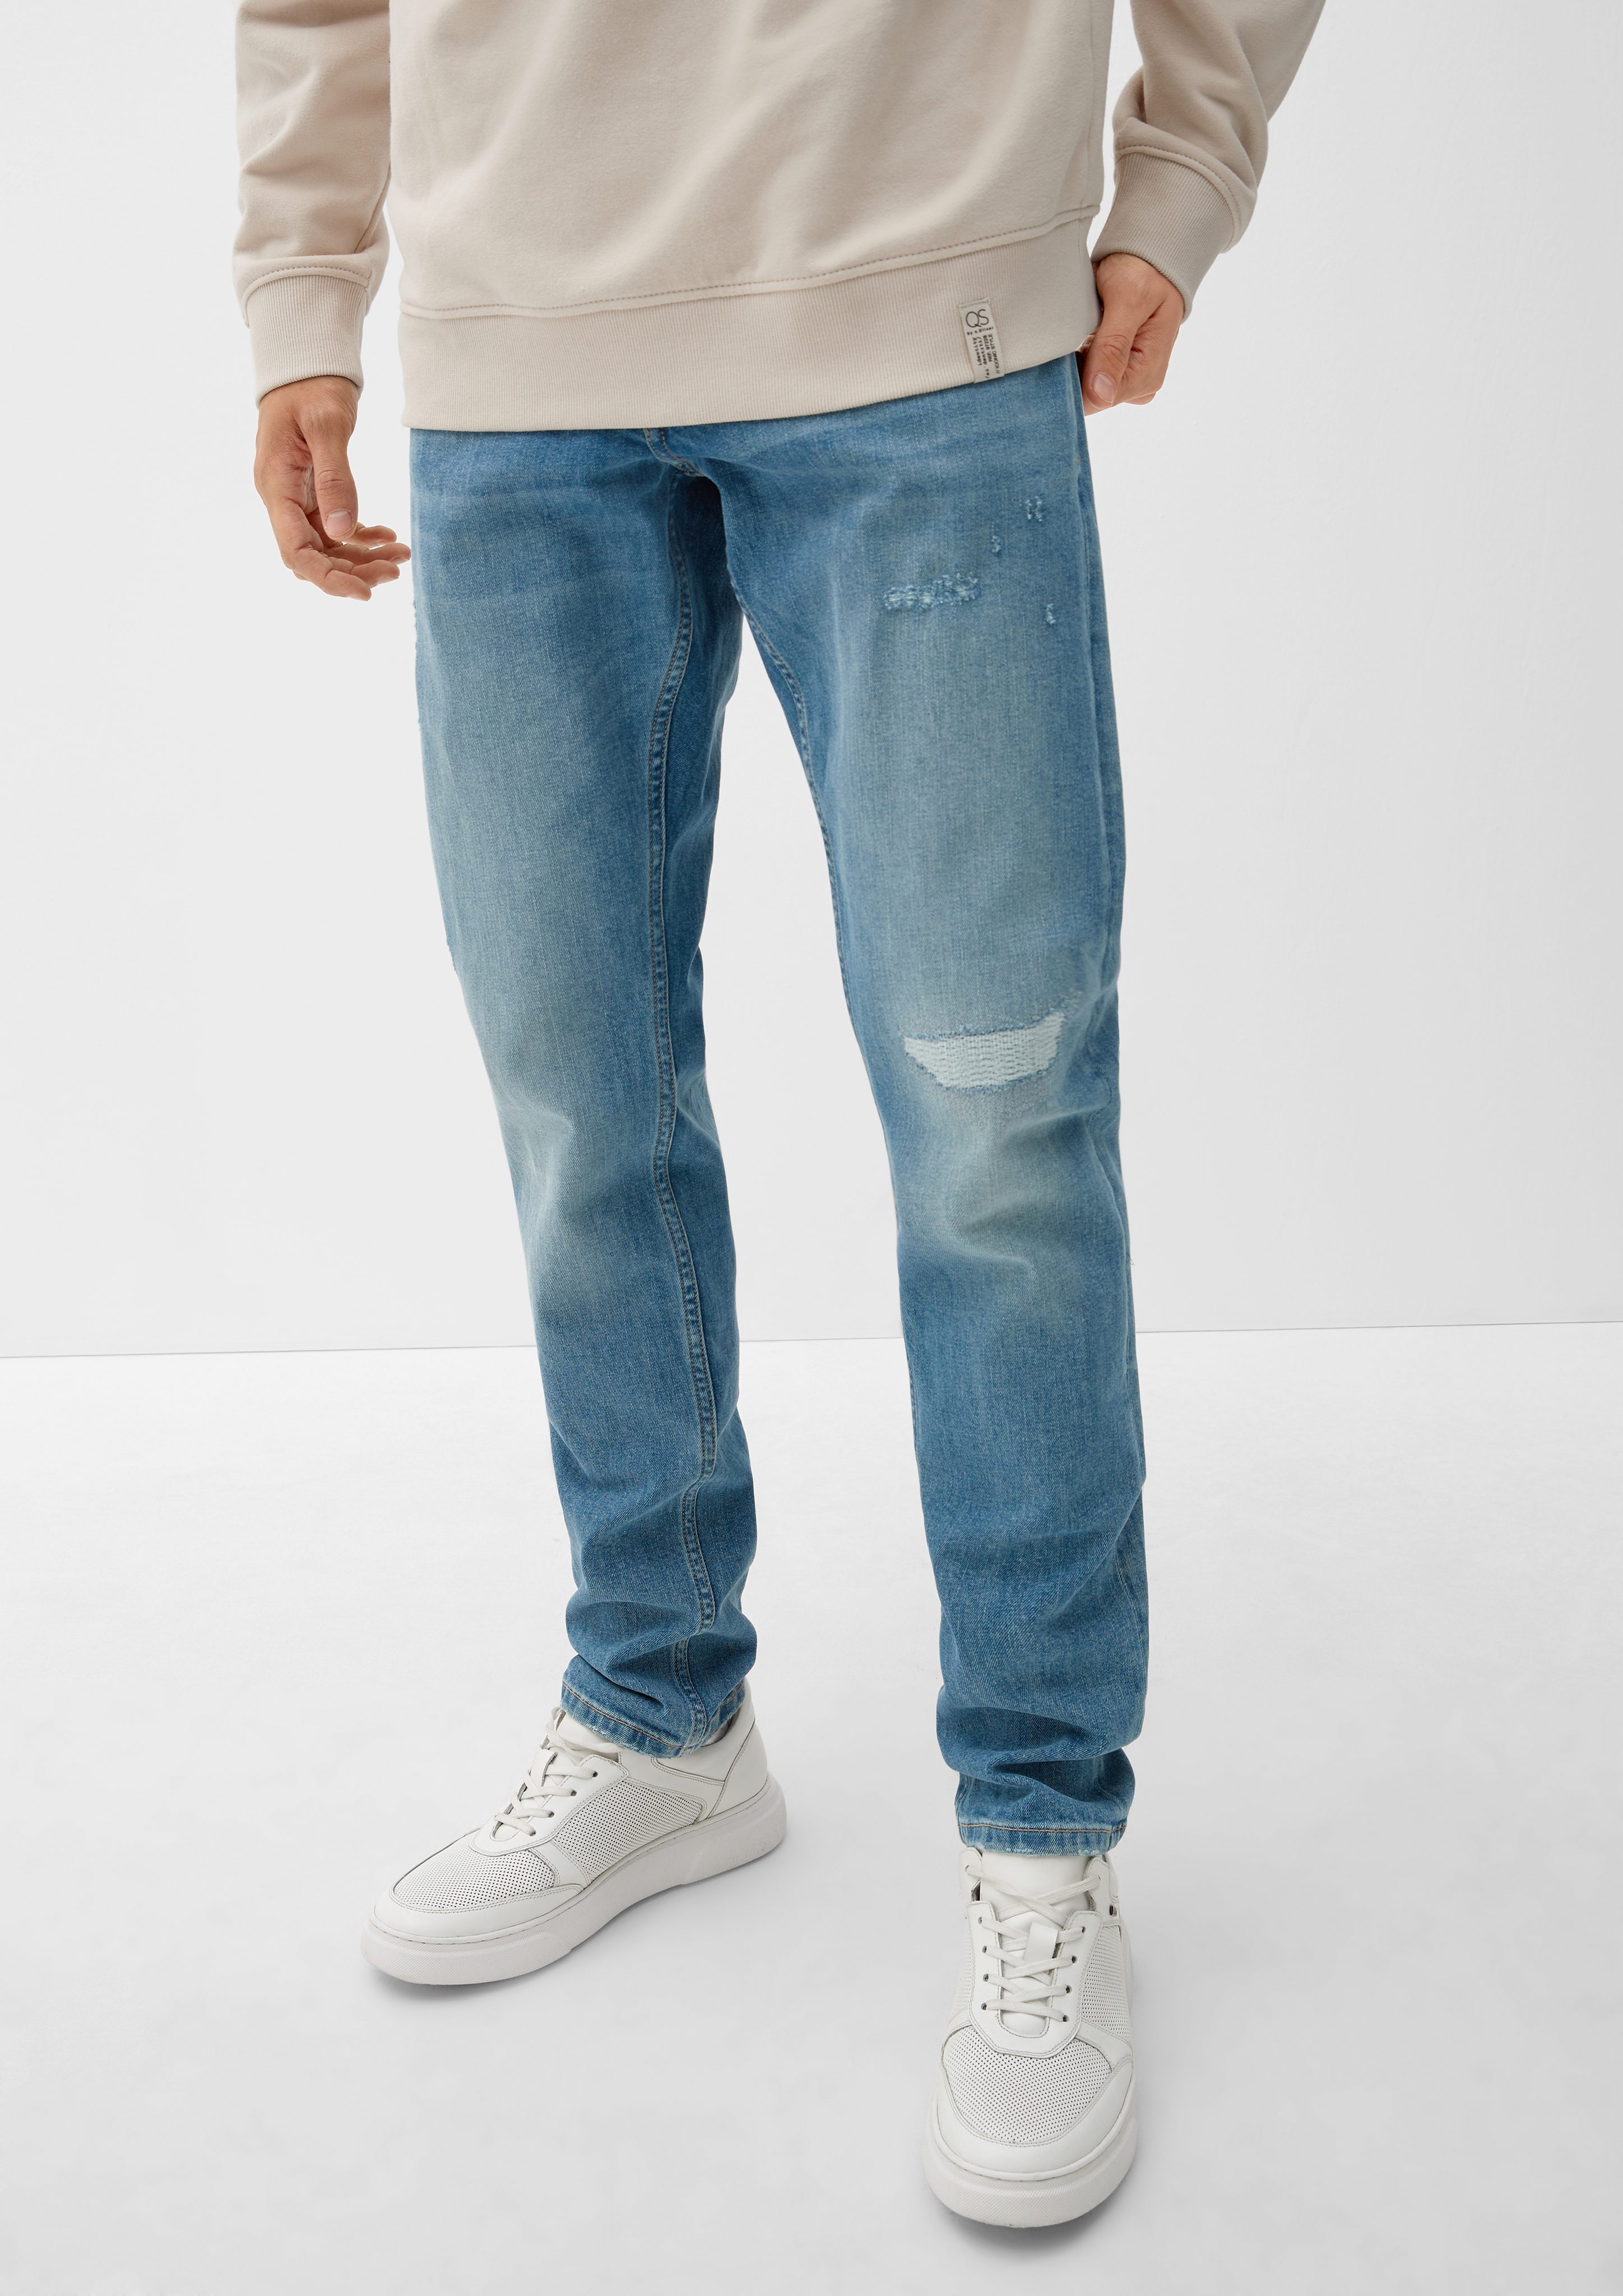 QS Stoffhose Jeans Rick / Slim Fit / Mid Rise / Slim Leg Destroyes, Leder-Patch, Waschung